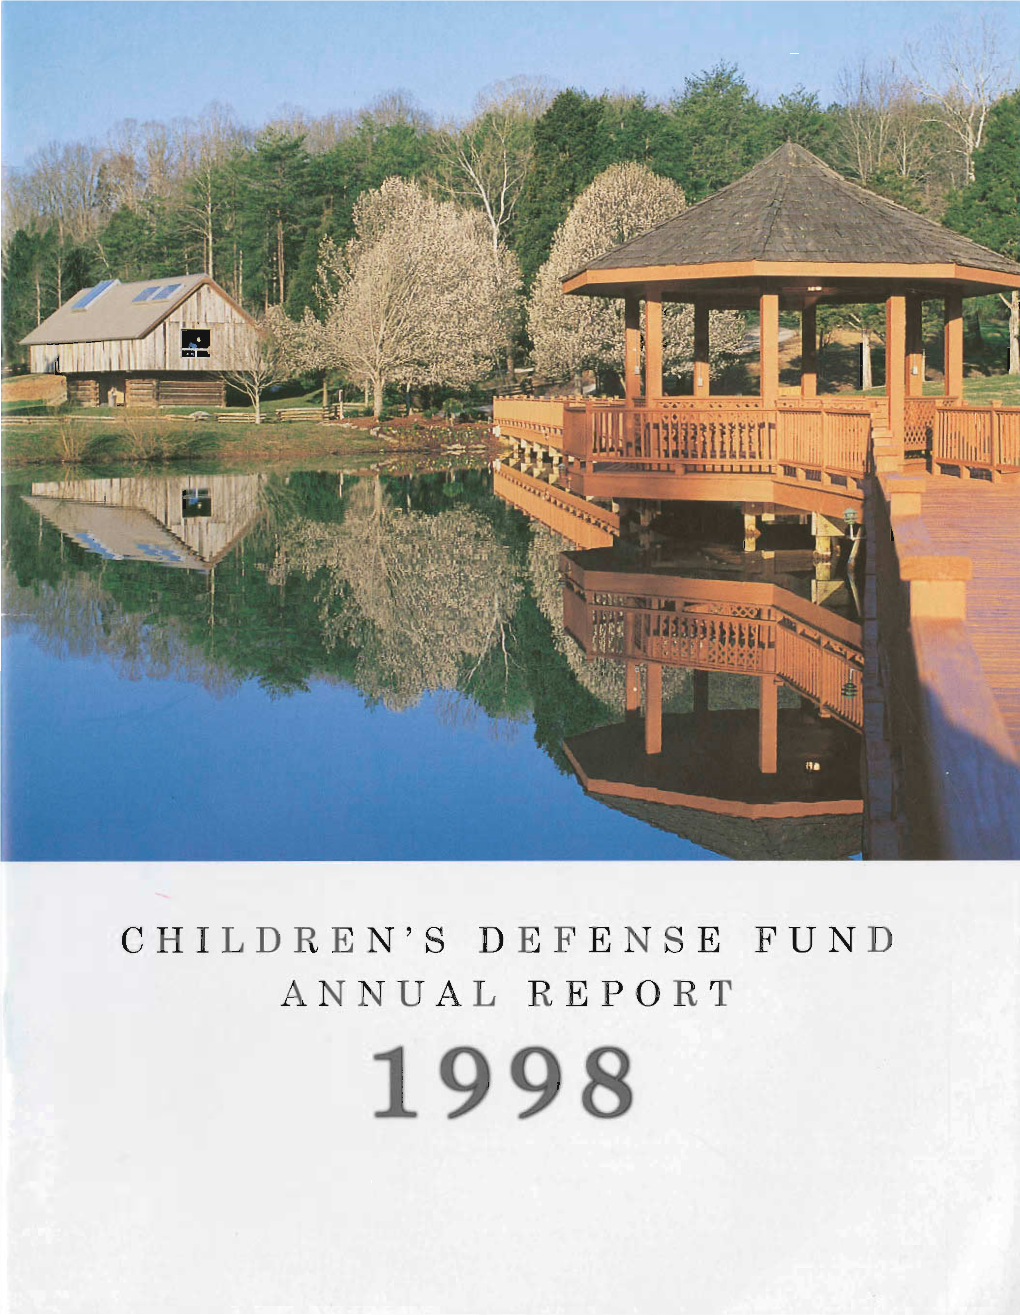 Children's Defense Fund Annual Report About the Children's Defense Fund